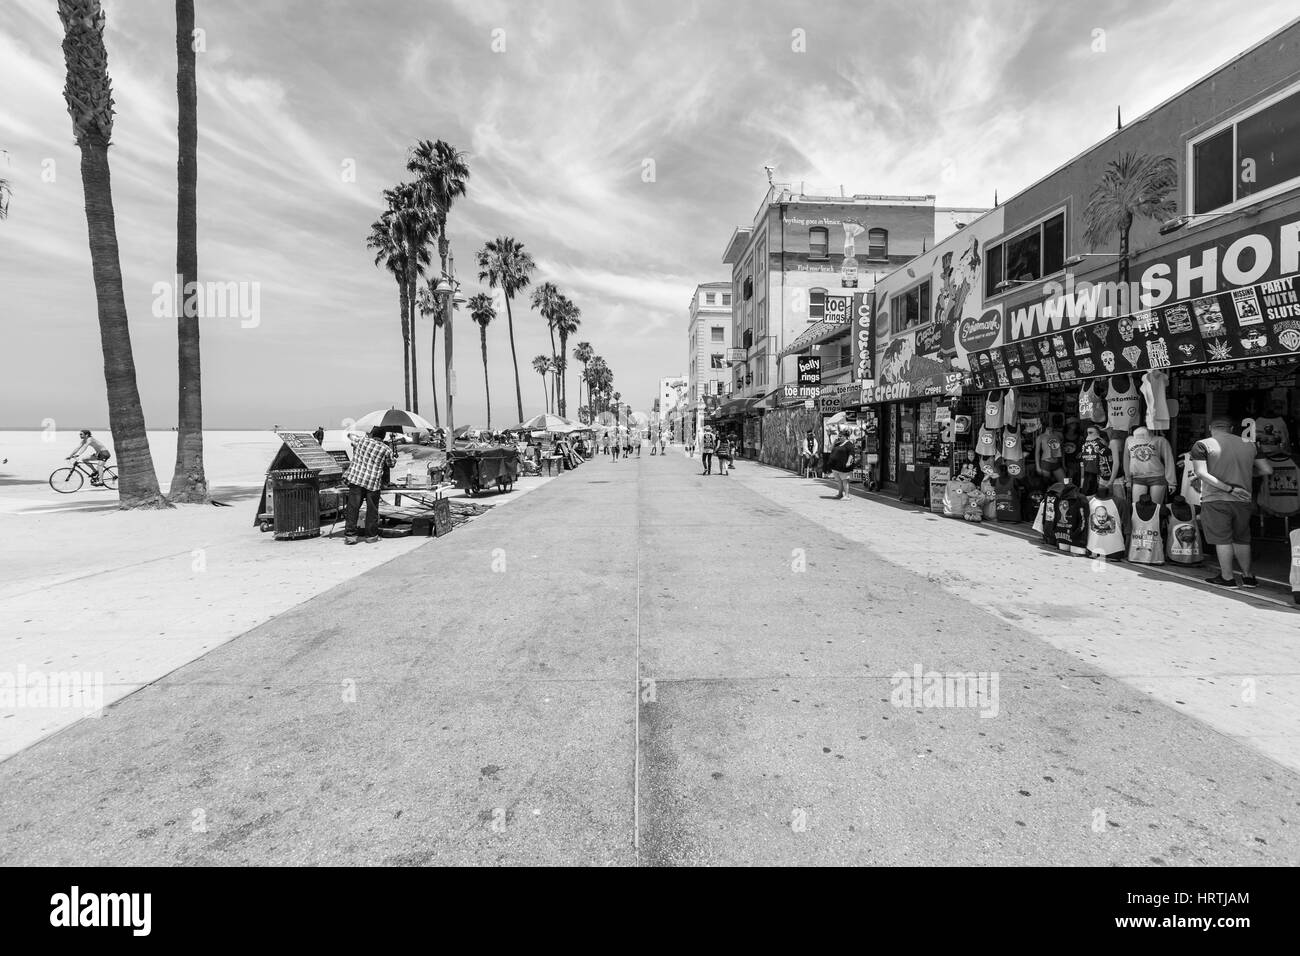 Los Angeles, Kalifornien, USA - 20. Juni 2014: Redaktionelle schwarz-weiß Foto des berühmten funky Venice Beach an Bord gehen in Los Angeles. Stockfoto